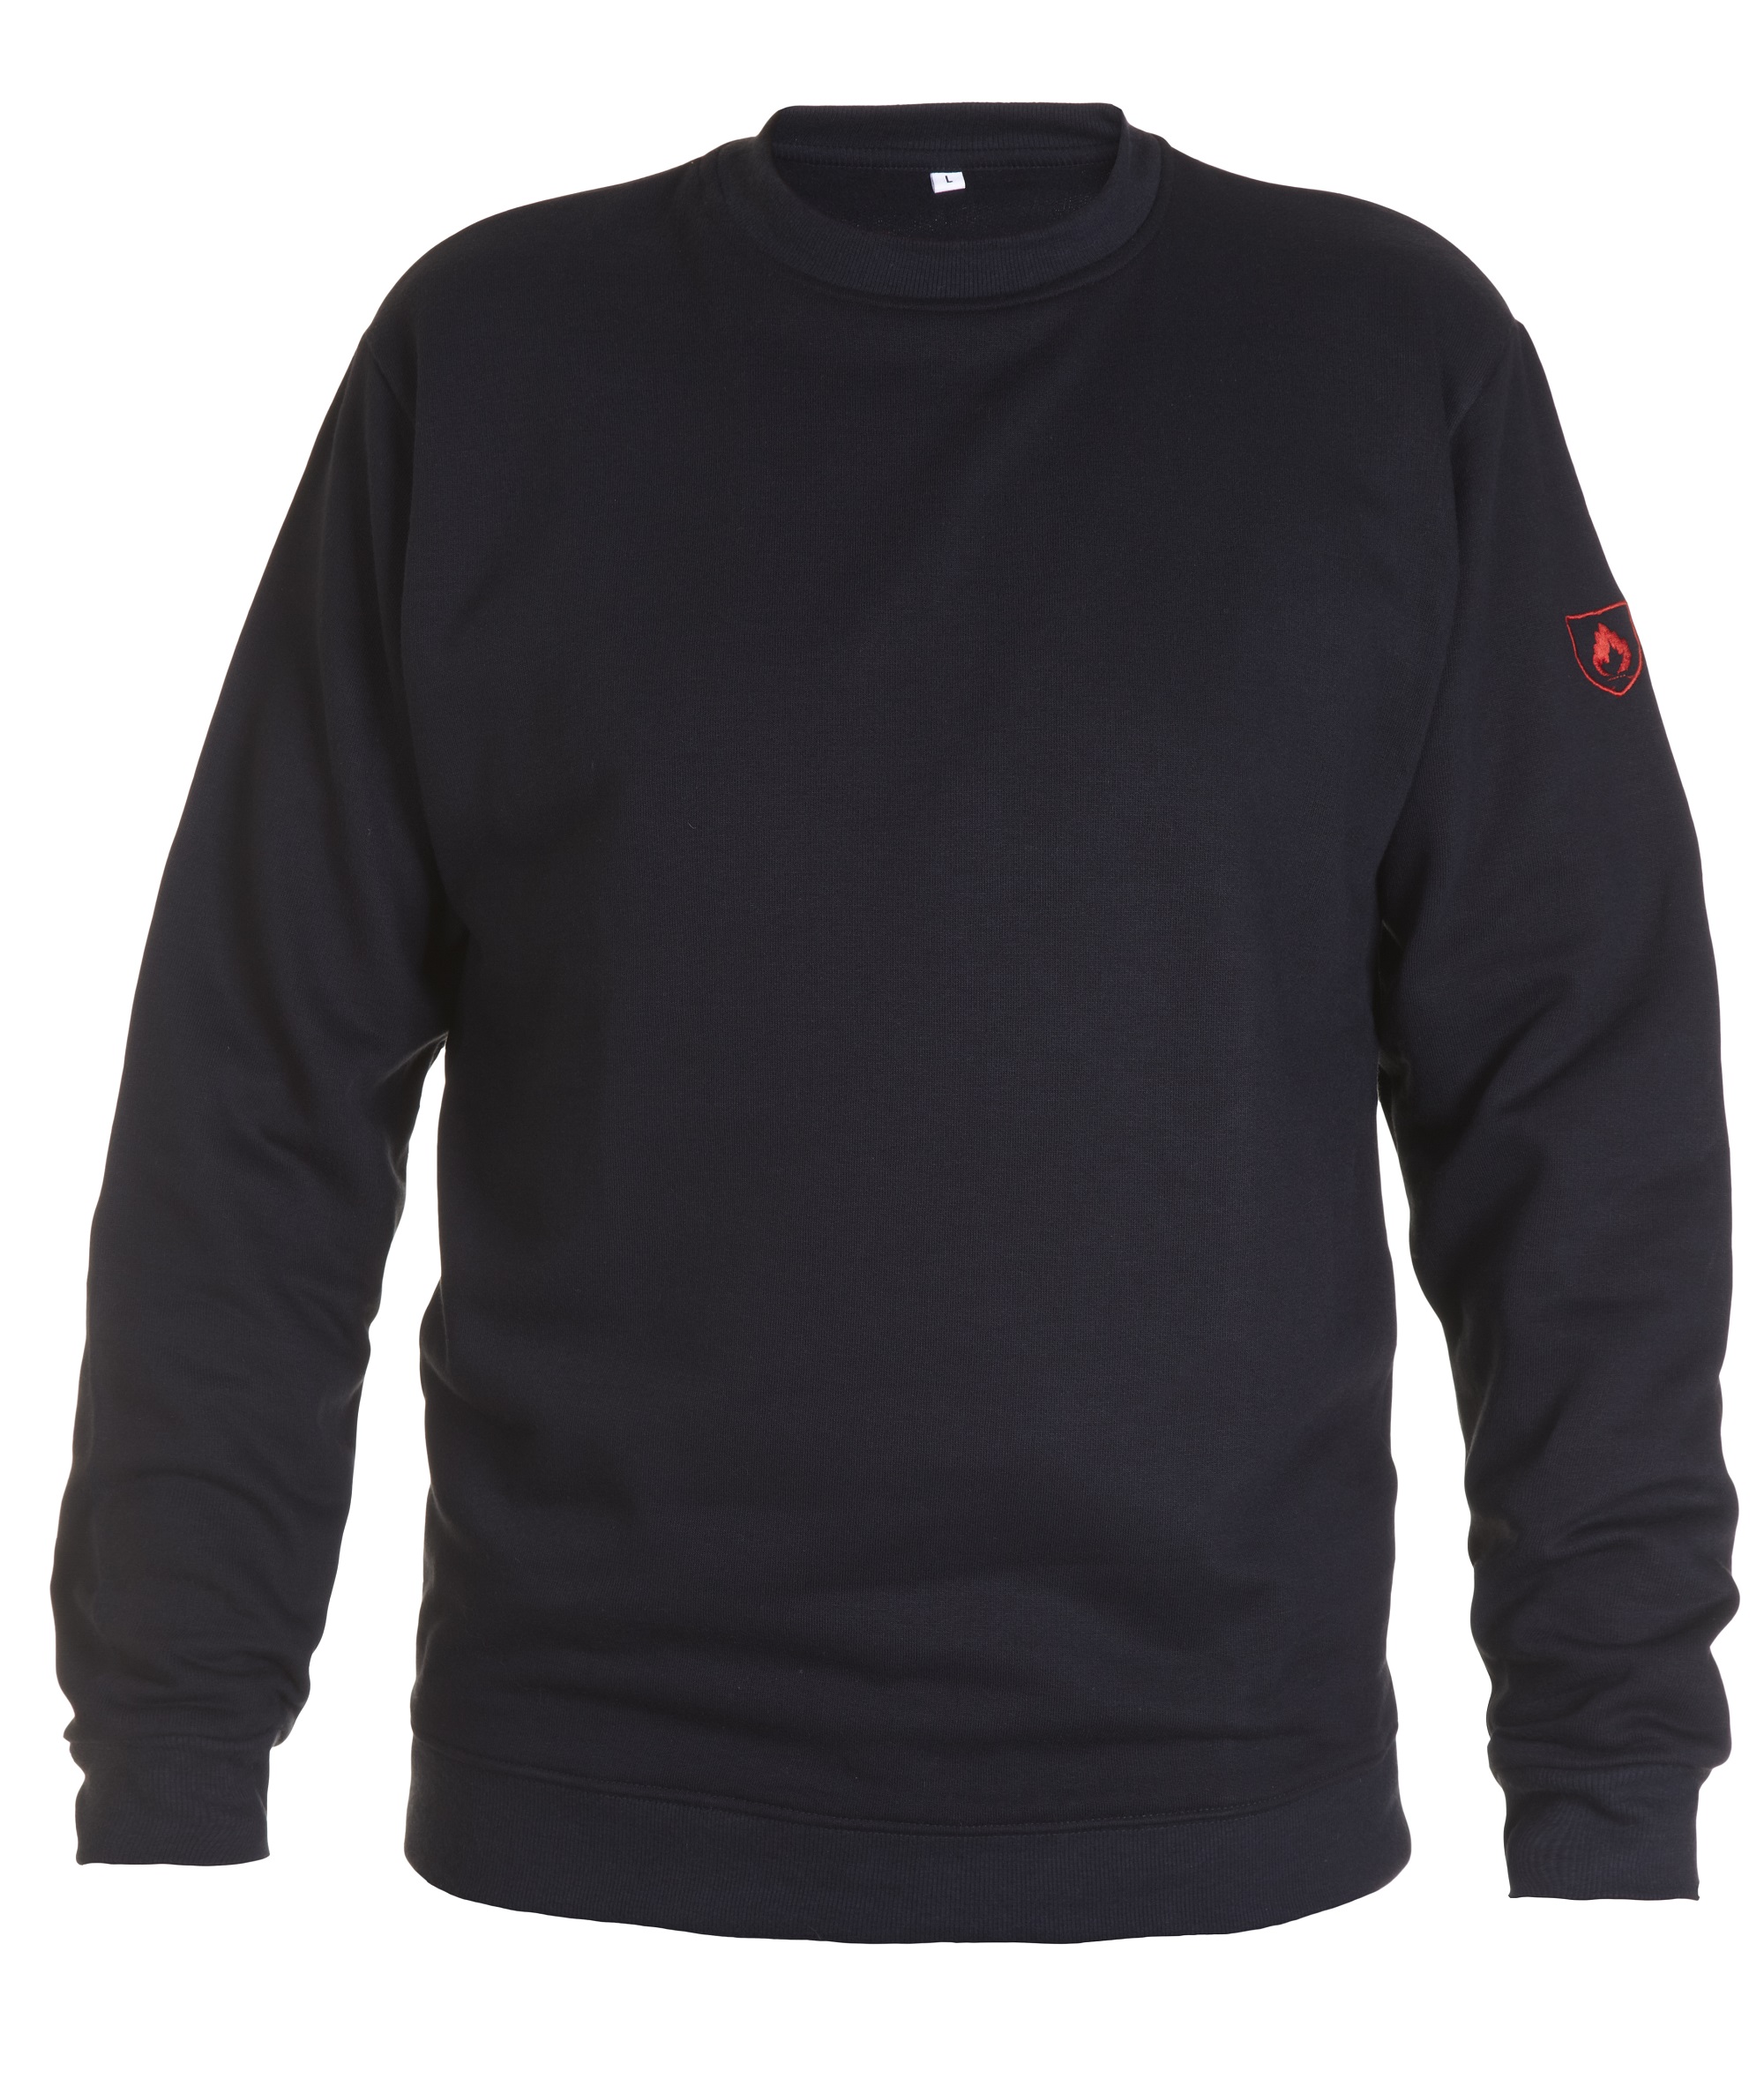 Sweater FR-AS Hydrowear Malaga navy, maat S